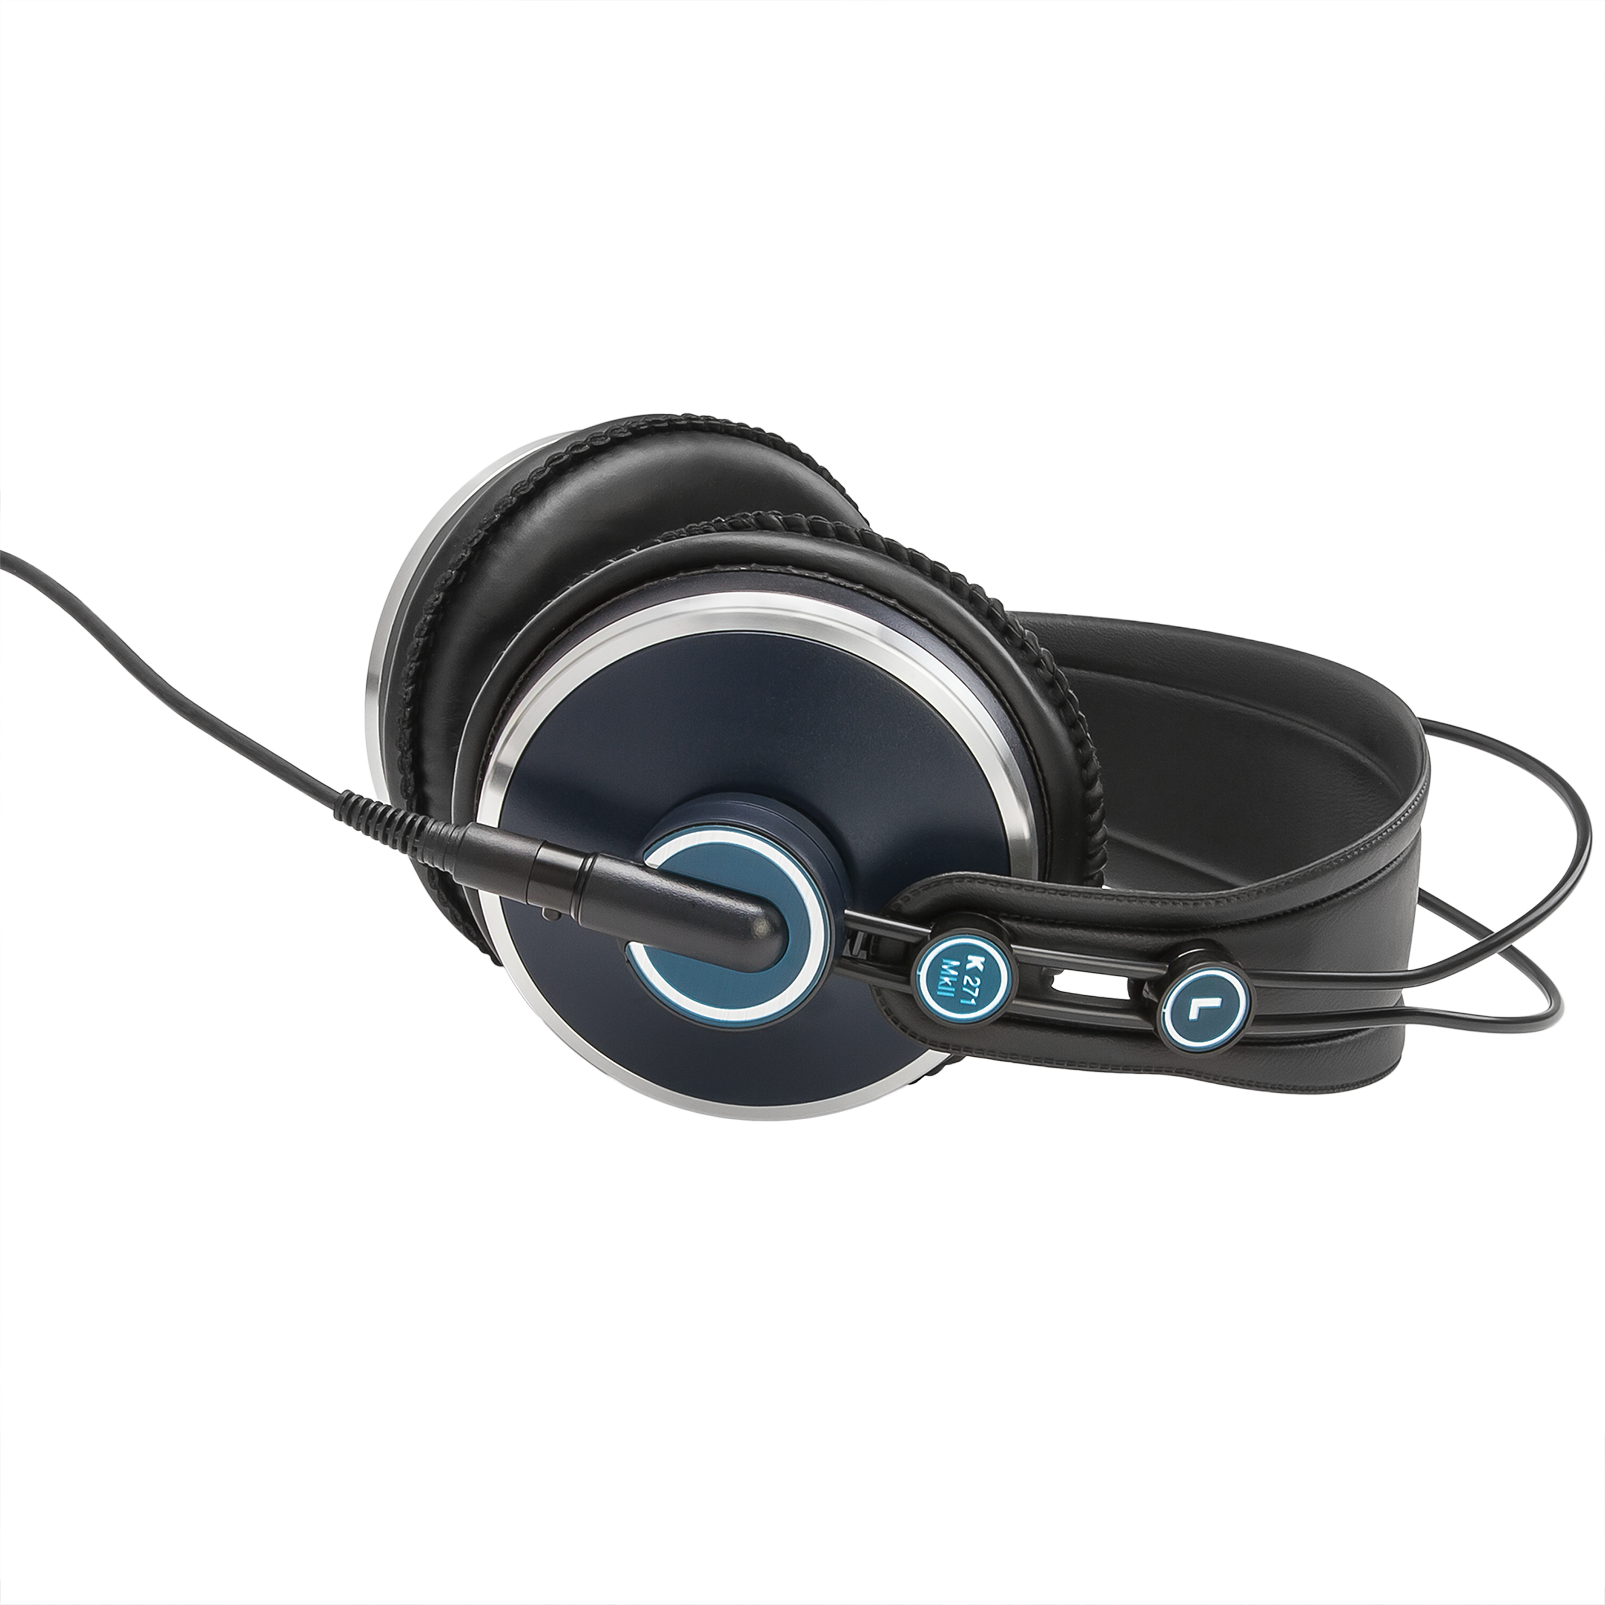 K271 MKII (B-Stock) - Black - Professional studio headphones - Detailshot 1